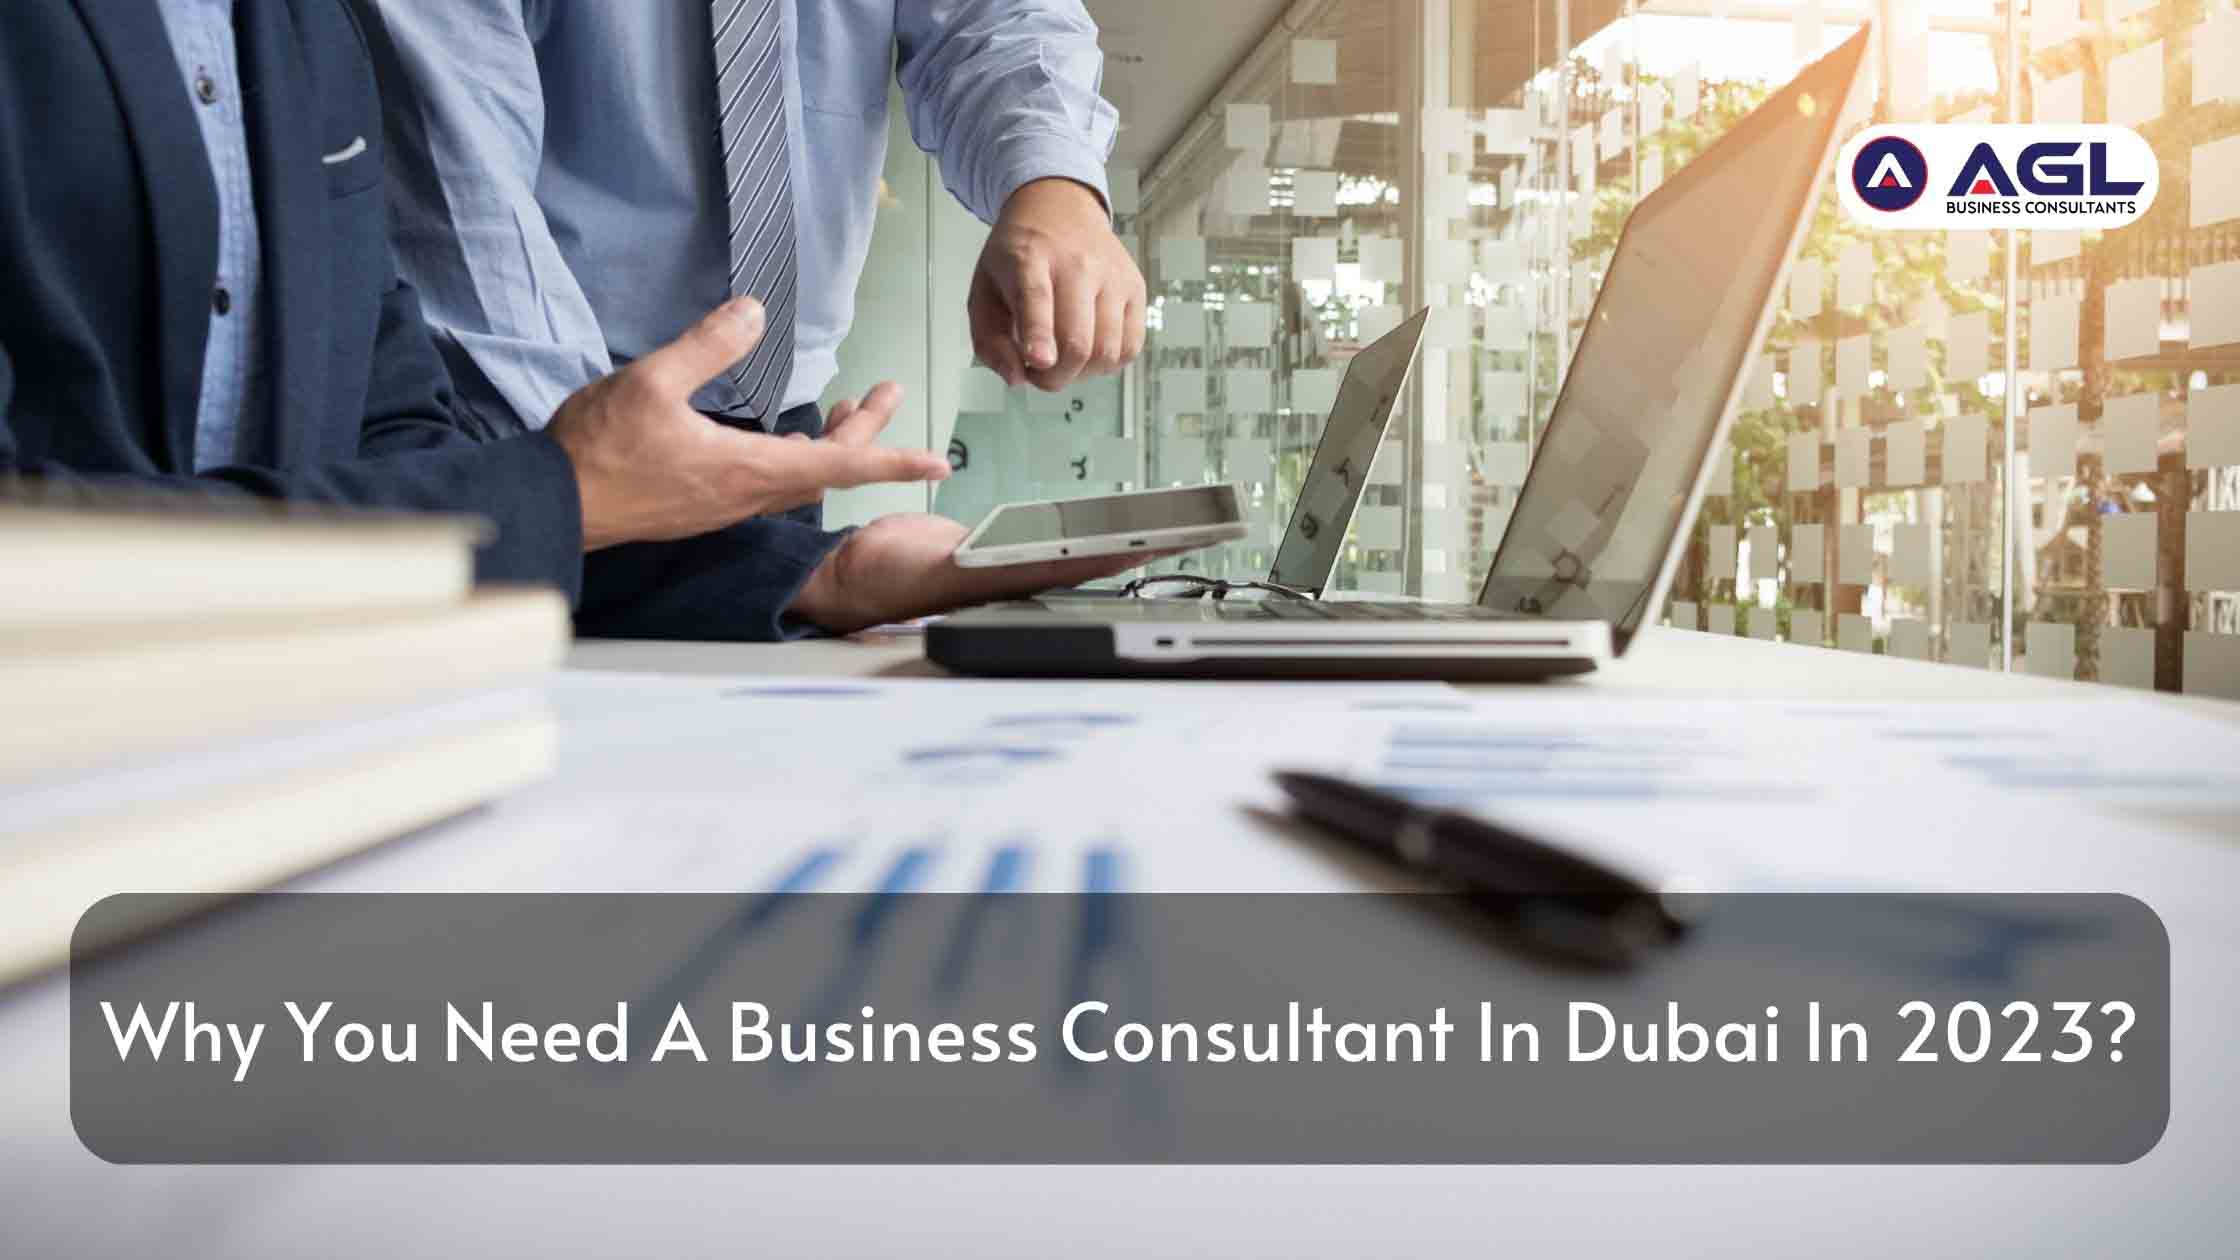 Business Consultant In Dubai In 2023?